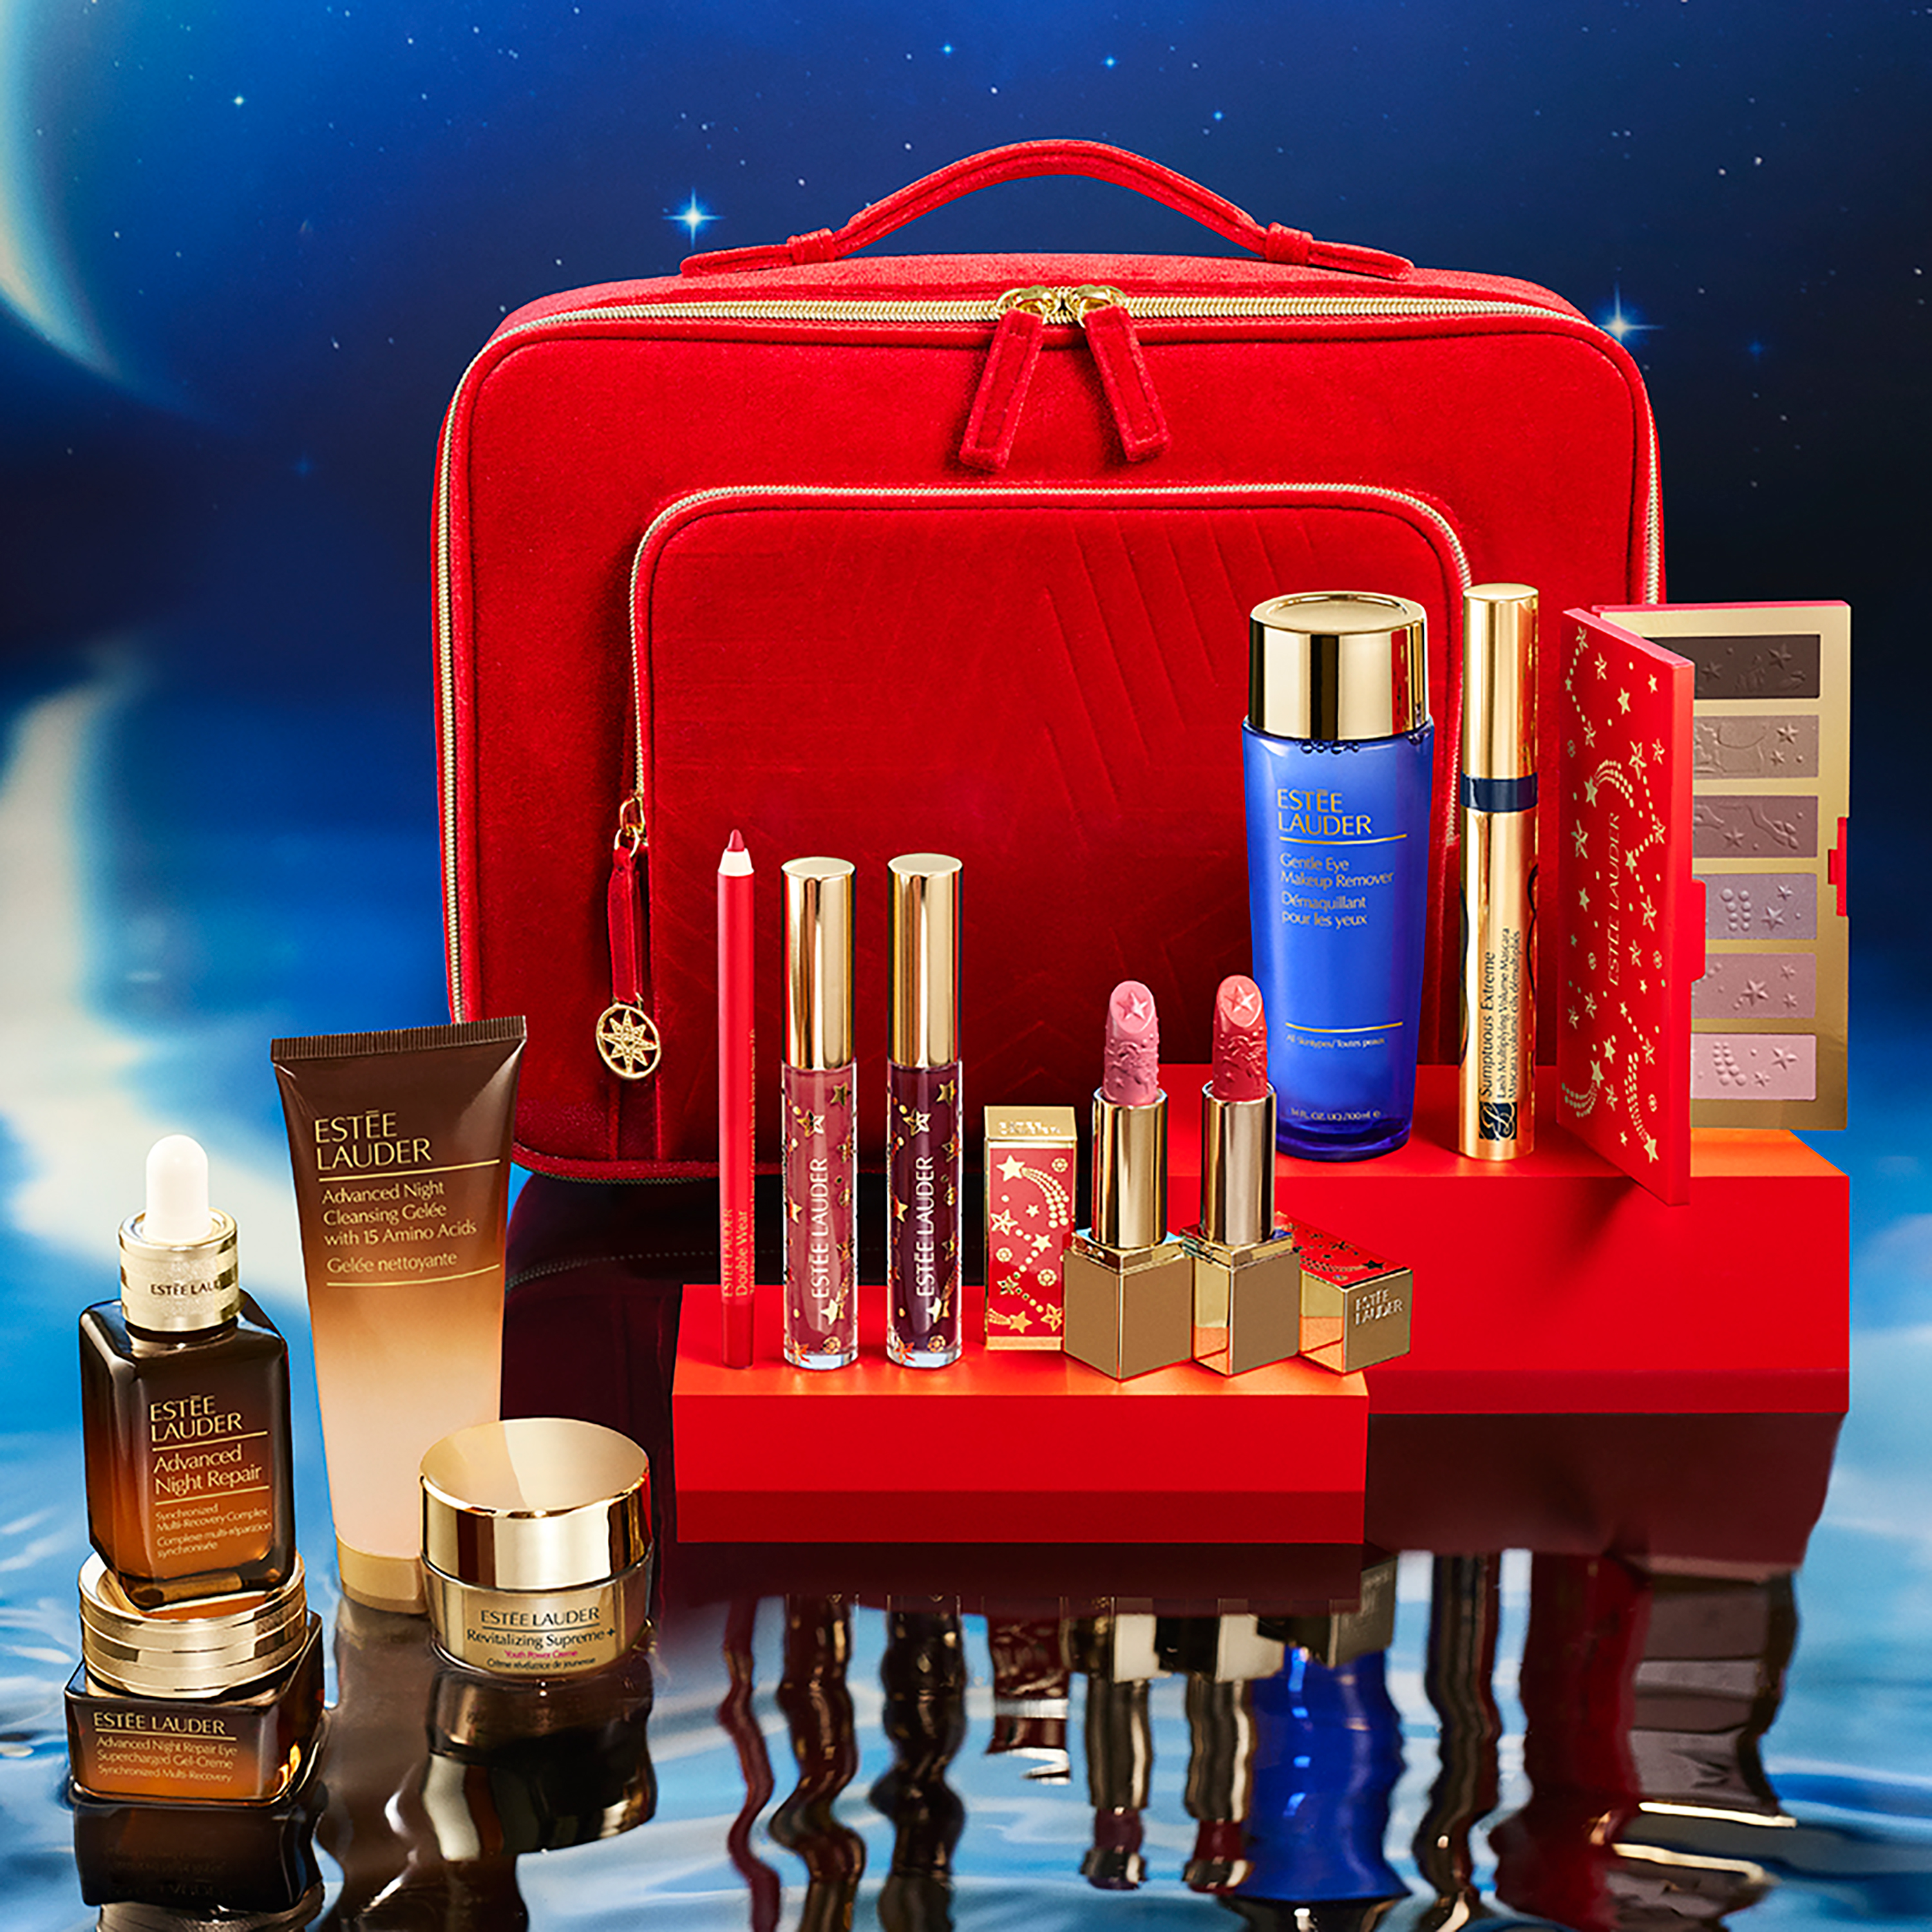 Receive the Blockbuster Gift Set for €95 when you spend €59 across Estée Lauder